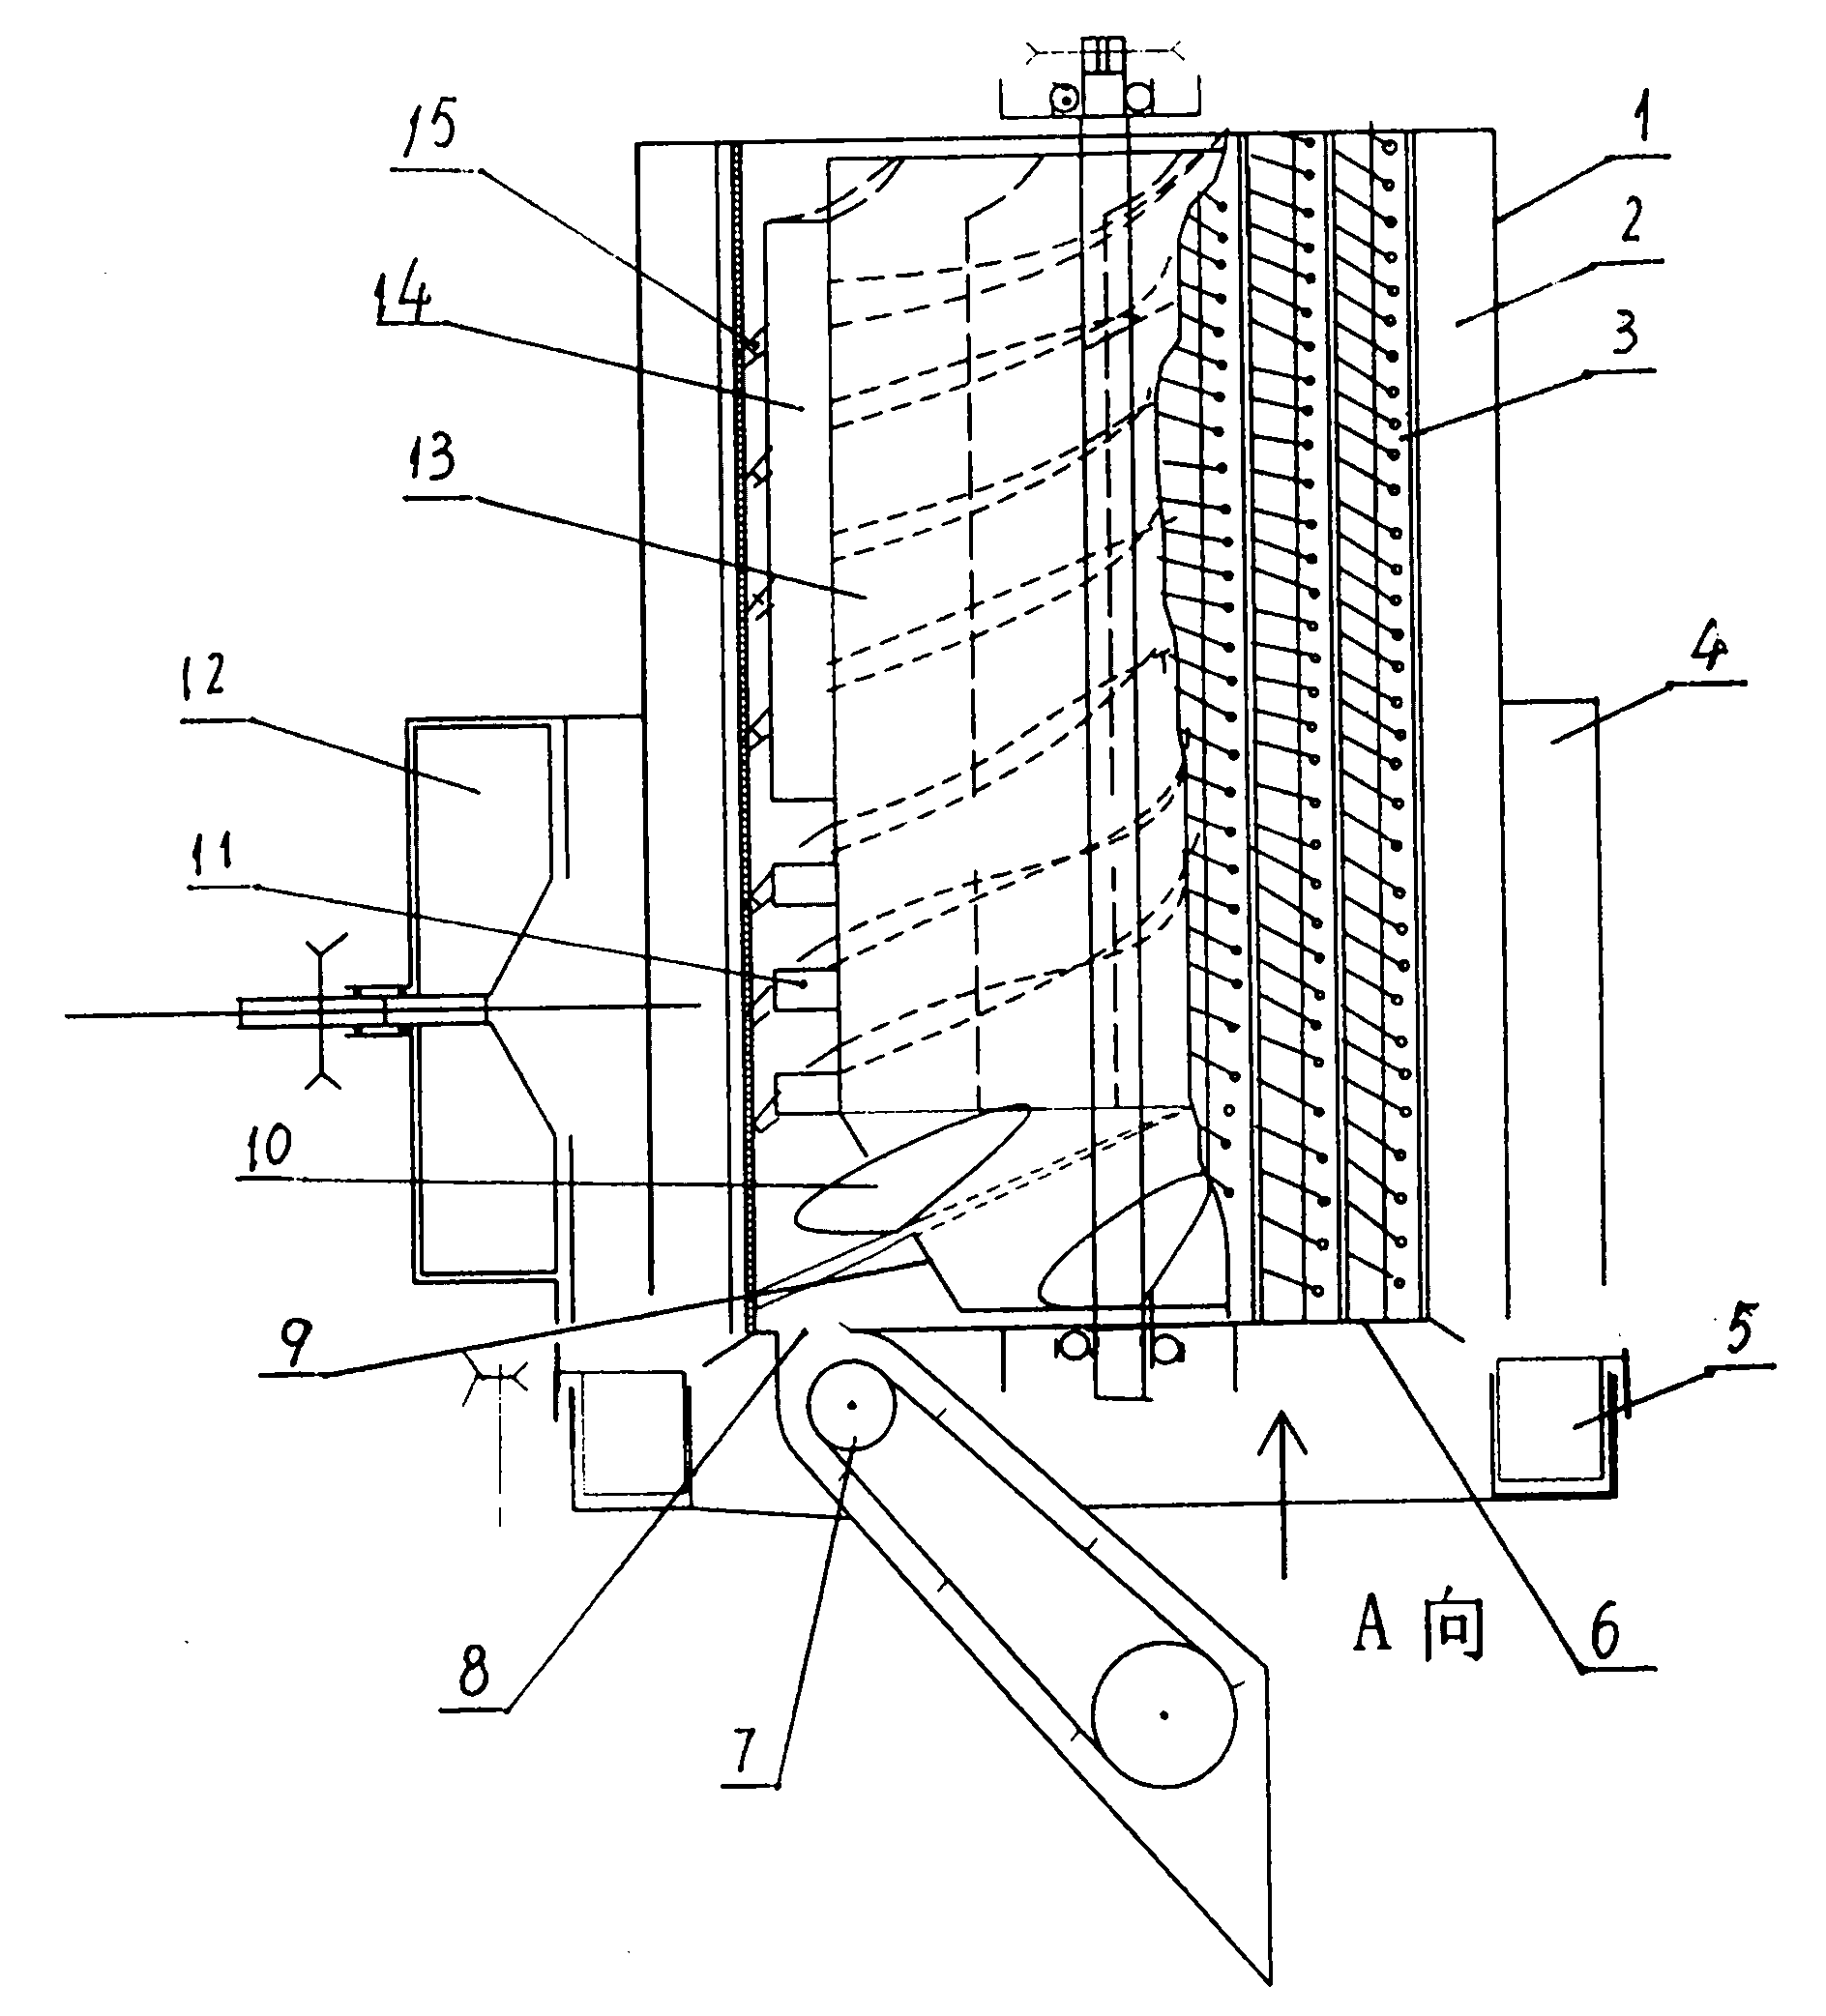 Bottom-feeding vertical type axial flow threshing device